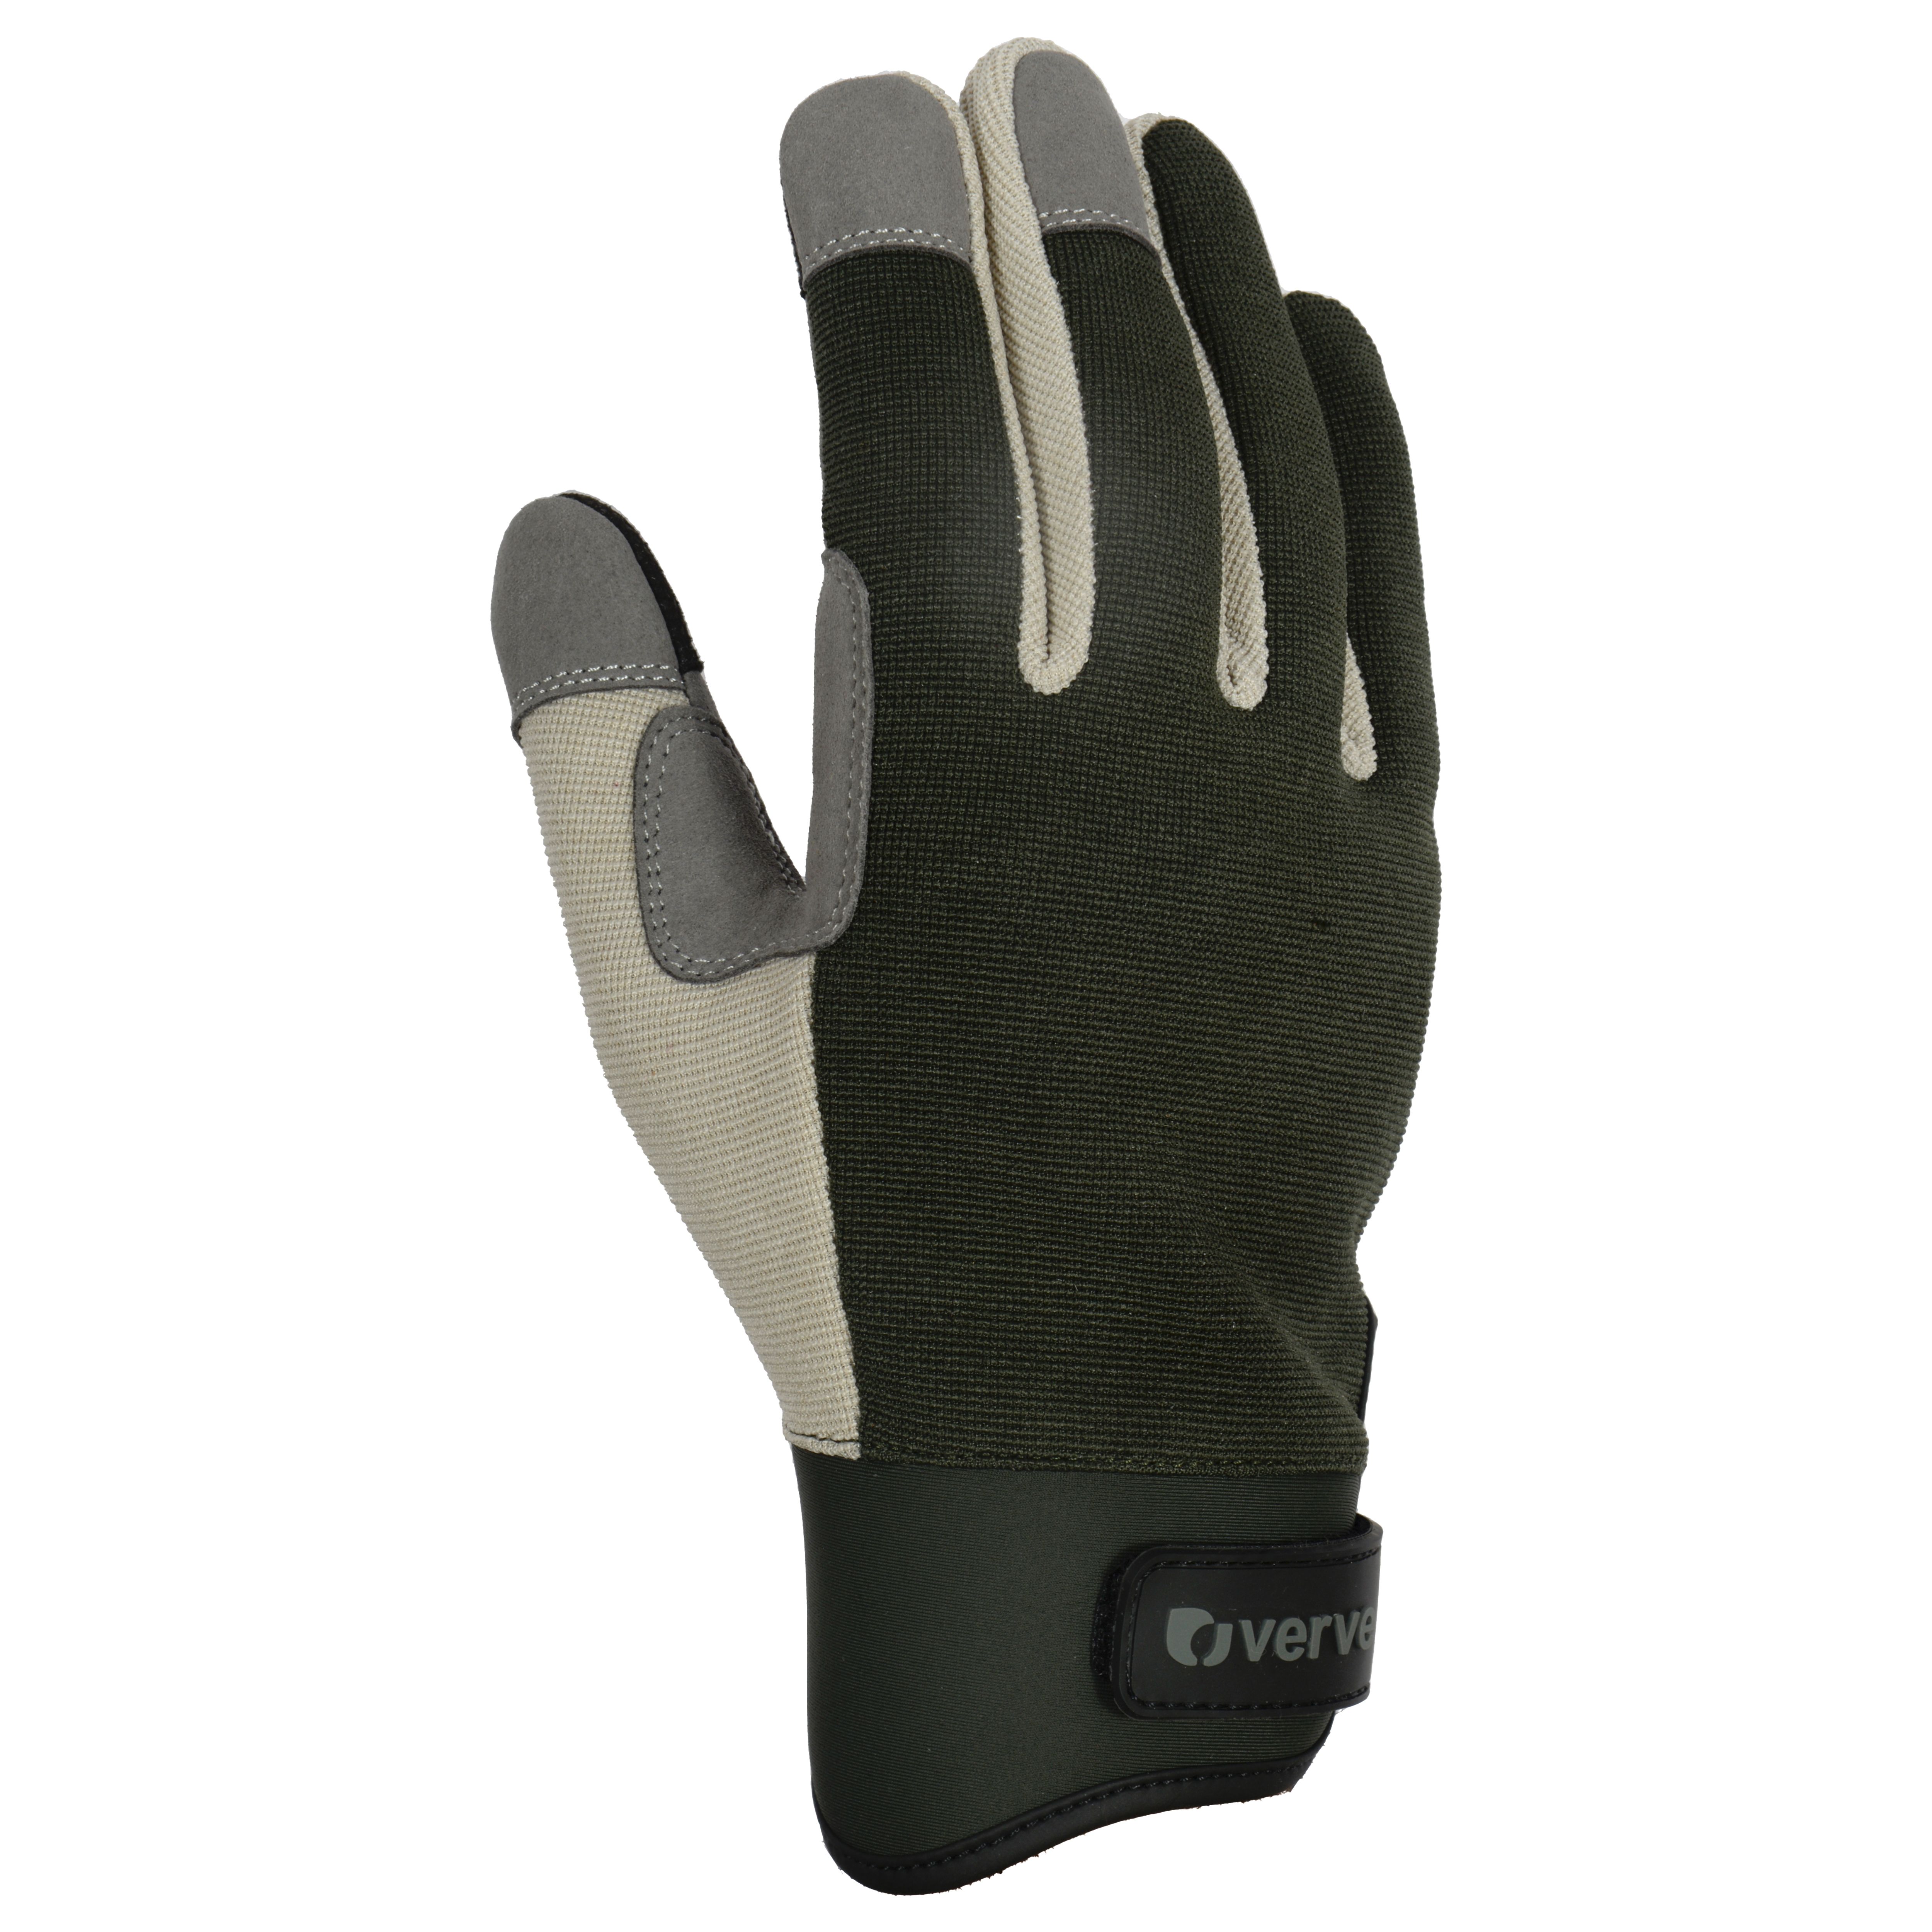 Verve Polyester Midnight Navy Gardening gloves Small, Pair